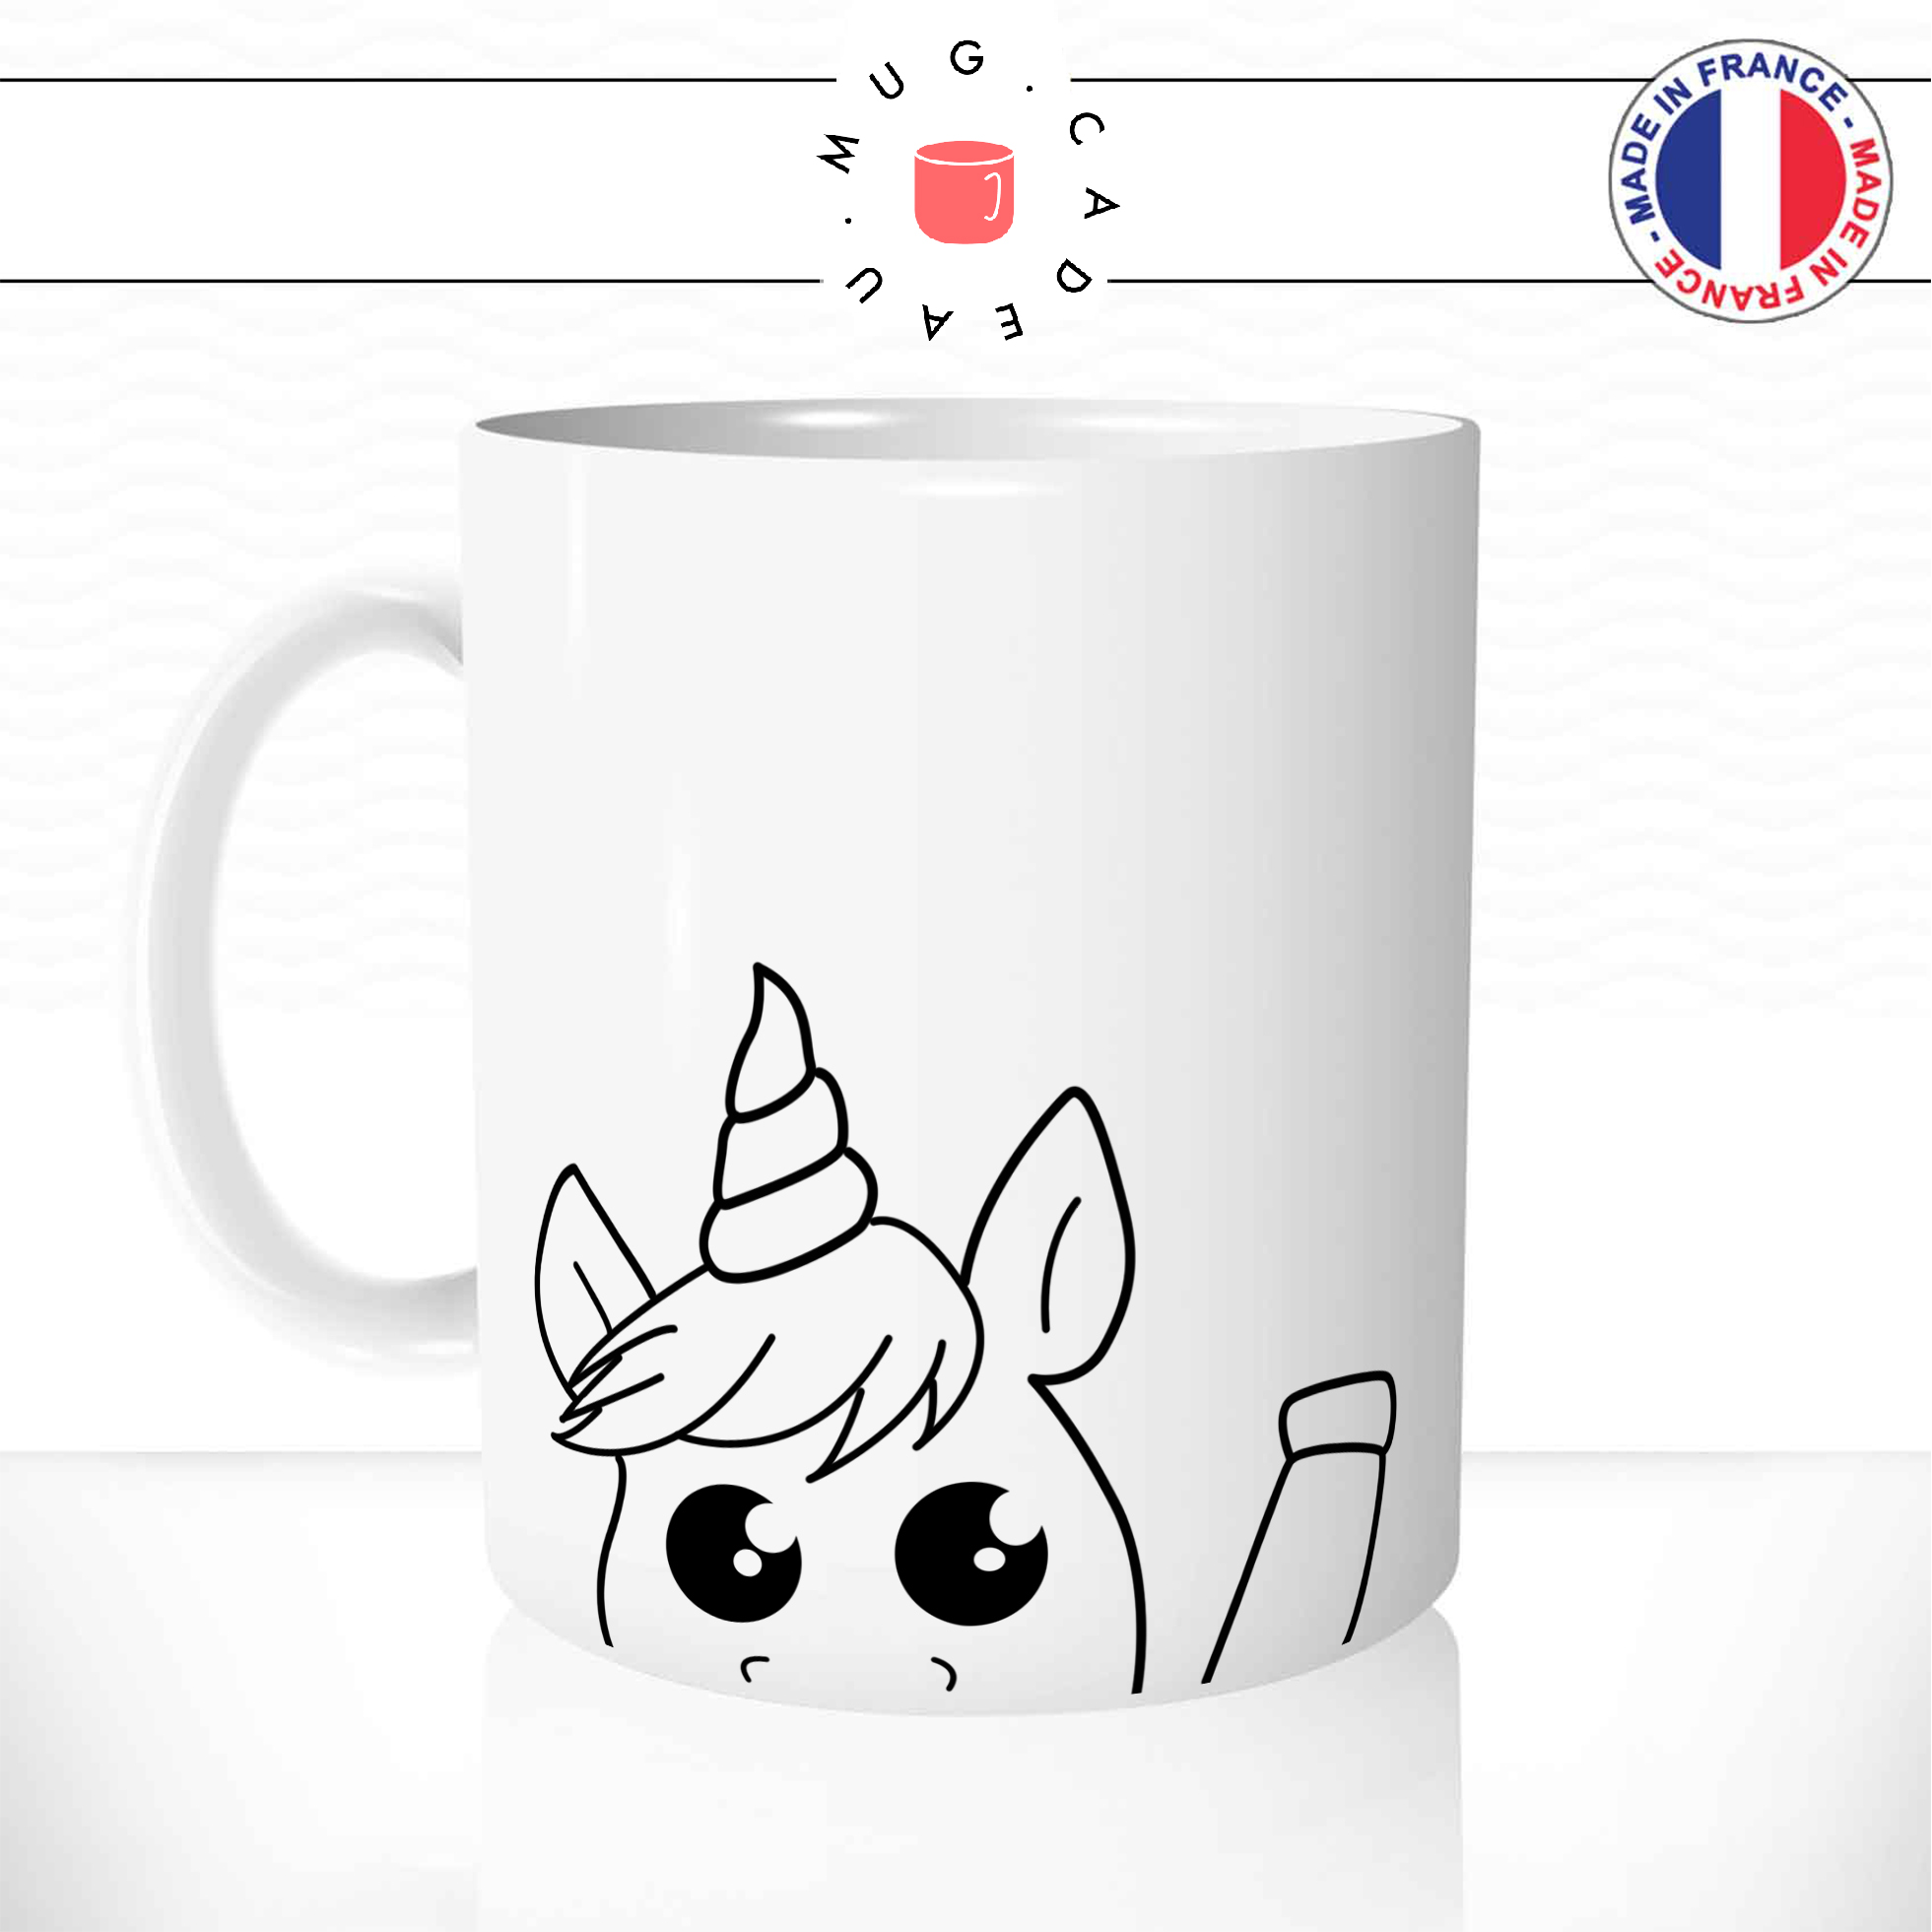 mug-tasse-ref11-licorne-noir-blanc-tete-cachee-cafe-the-mugs-tasses-personnalise-anse-gauche